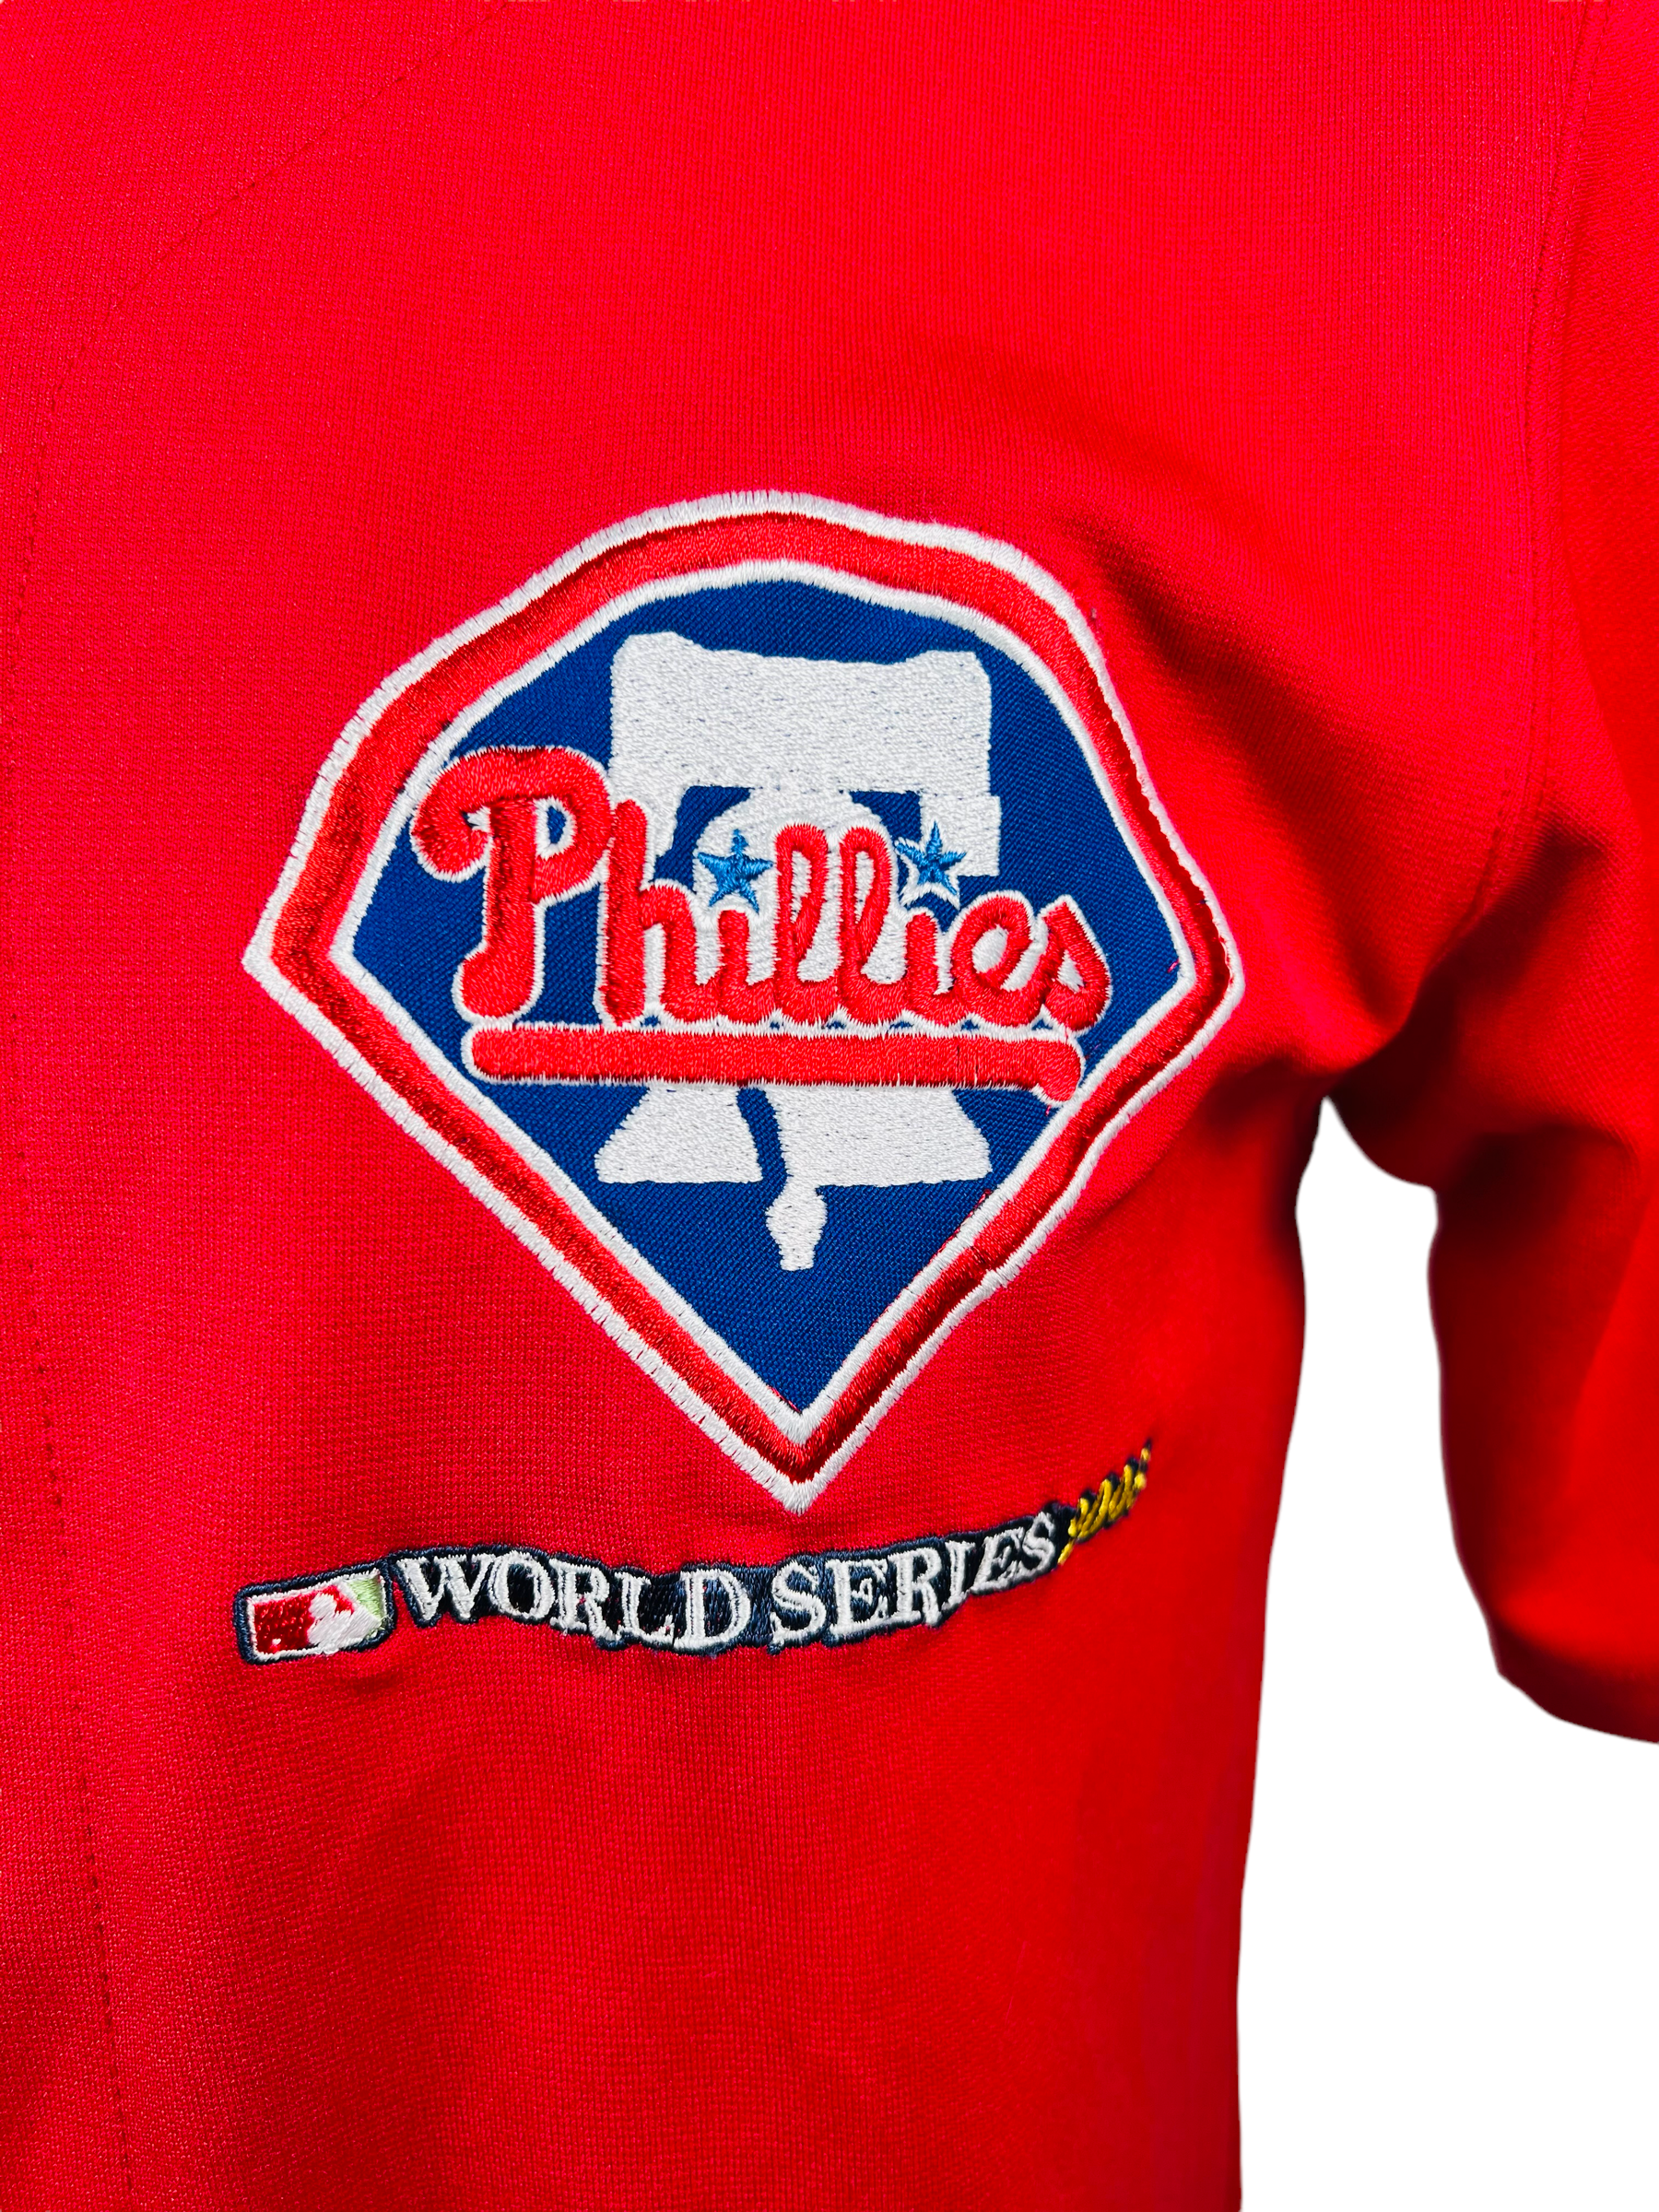 Philadelphia Phillies Jerseys in Philadelphia Phillies Team Shop 